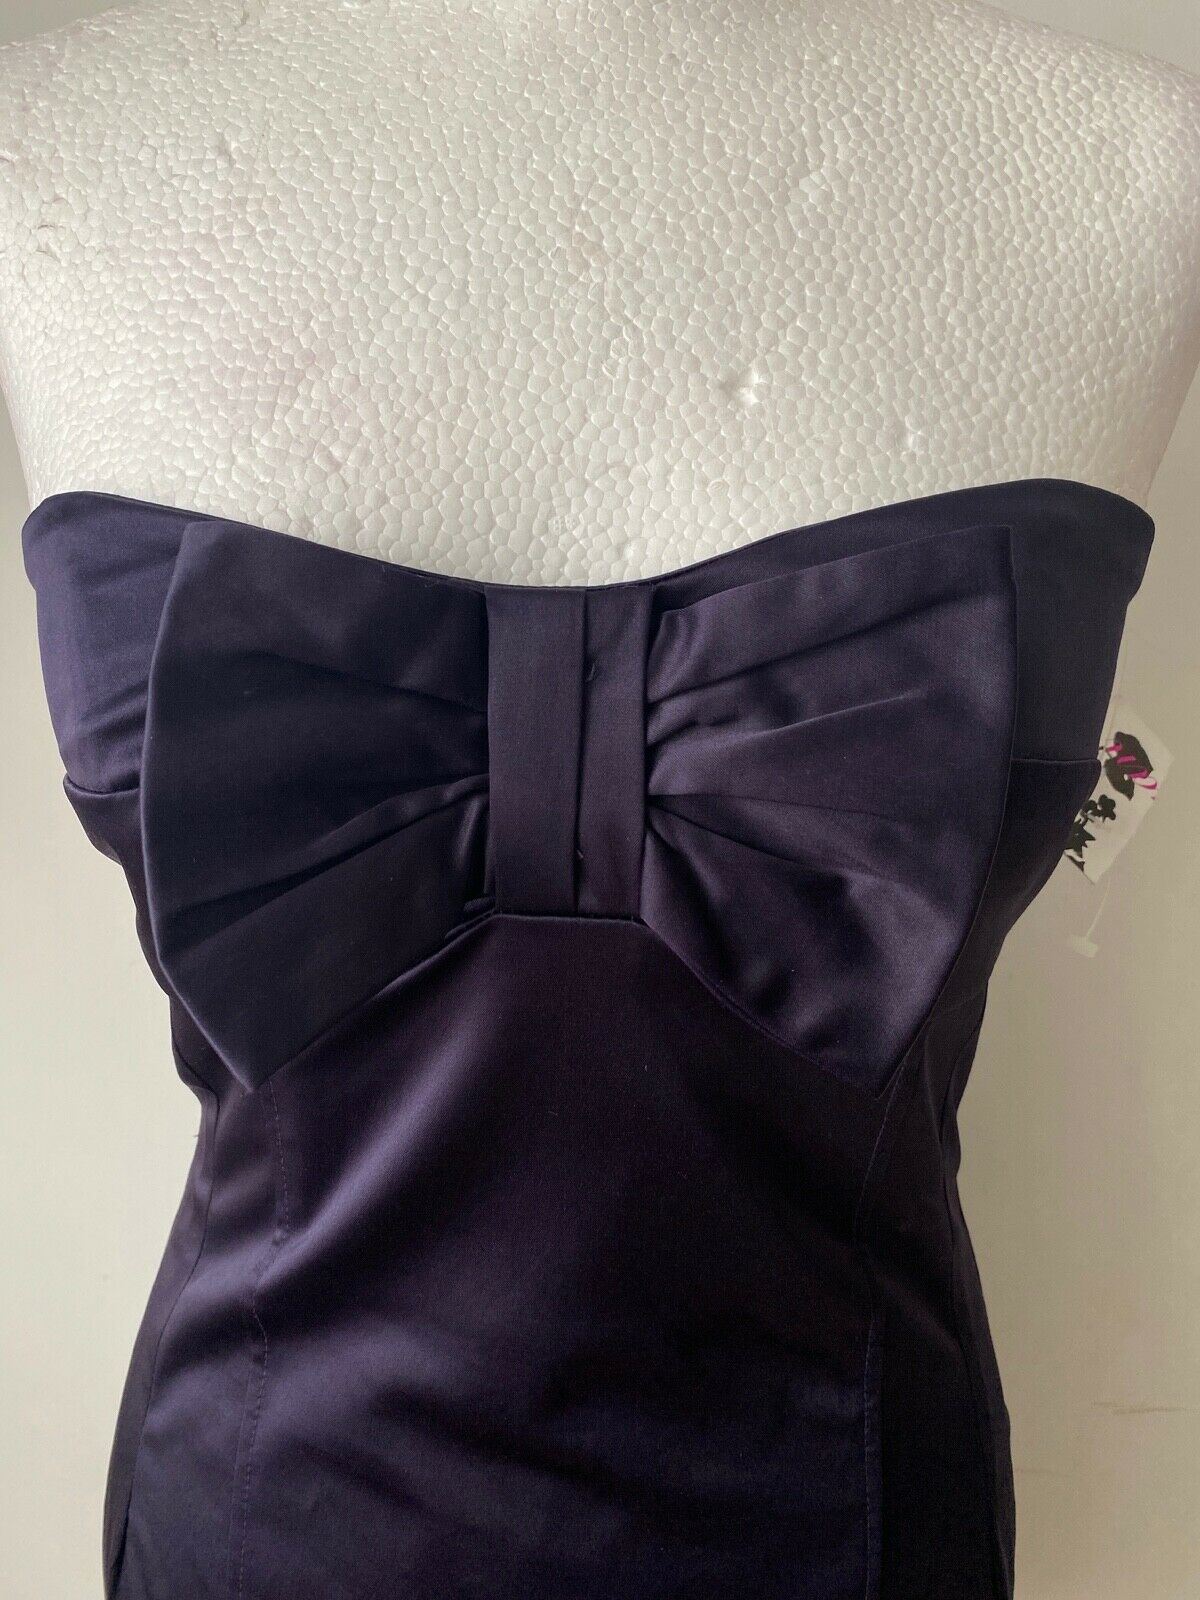 Elise Ryan Strapless Bodycon Dress Size 12 Bow Detail Dark Purple